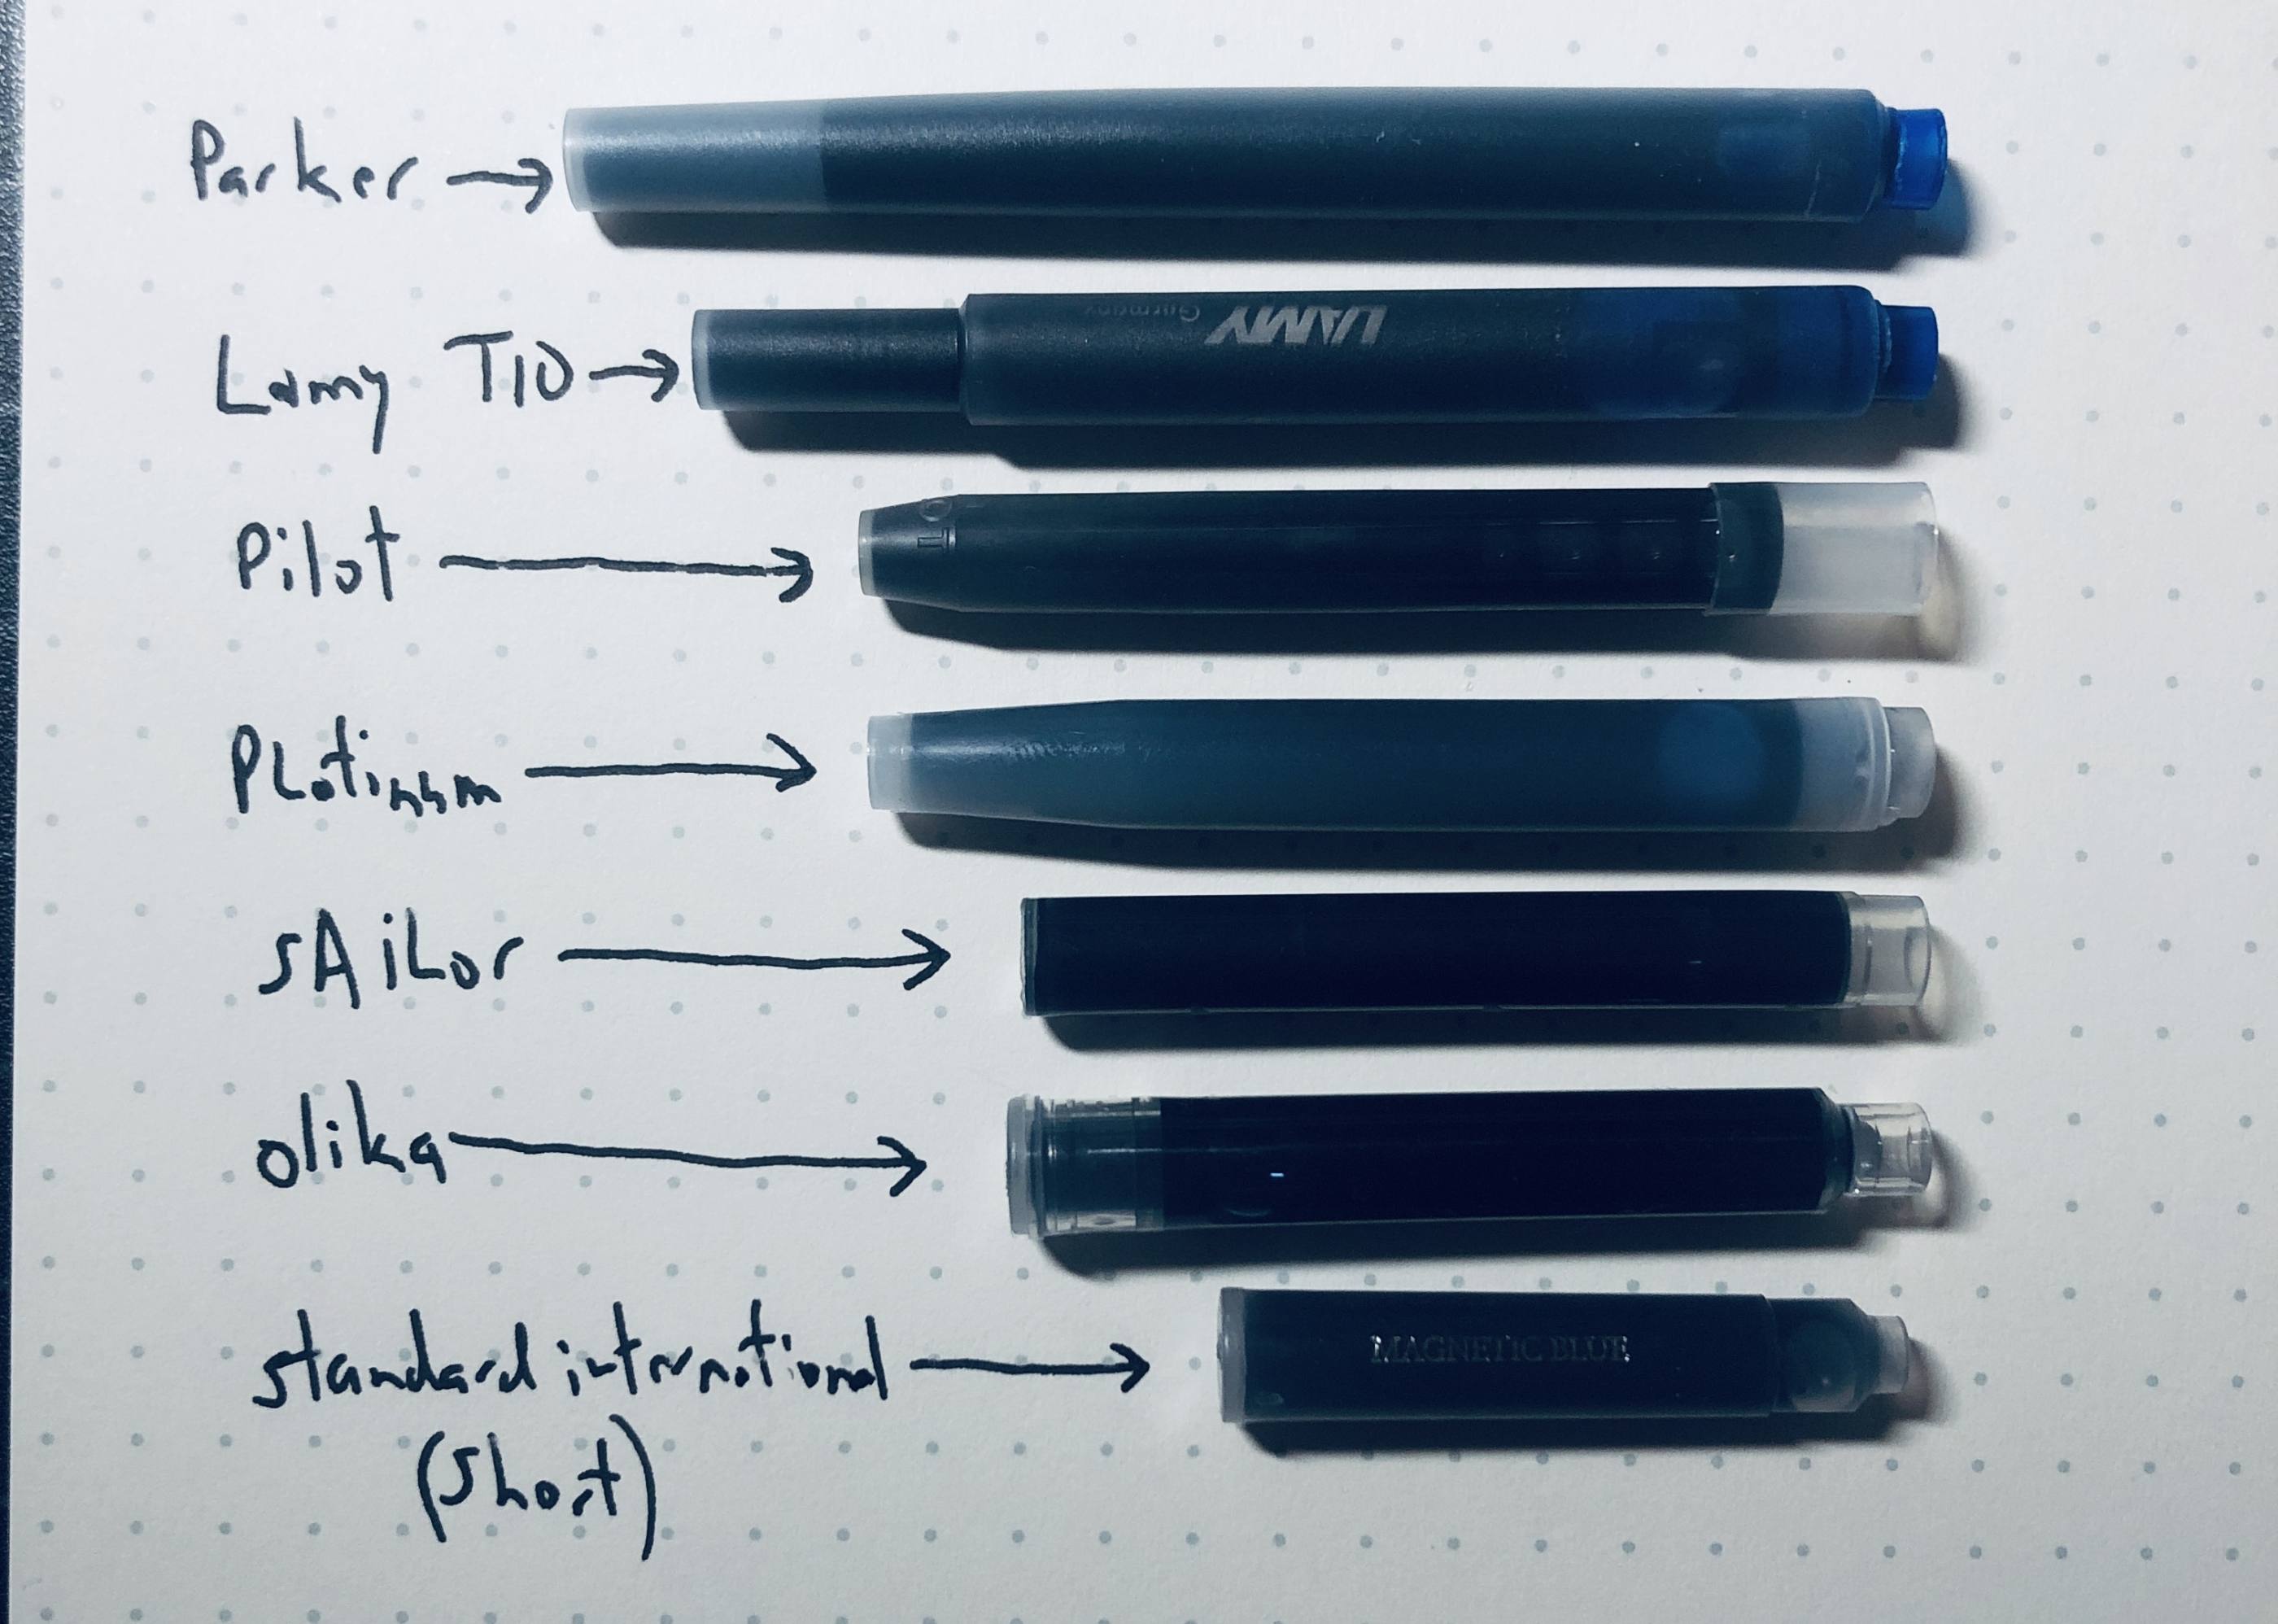 Parker Fine Pens, Quink Inks and Refills